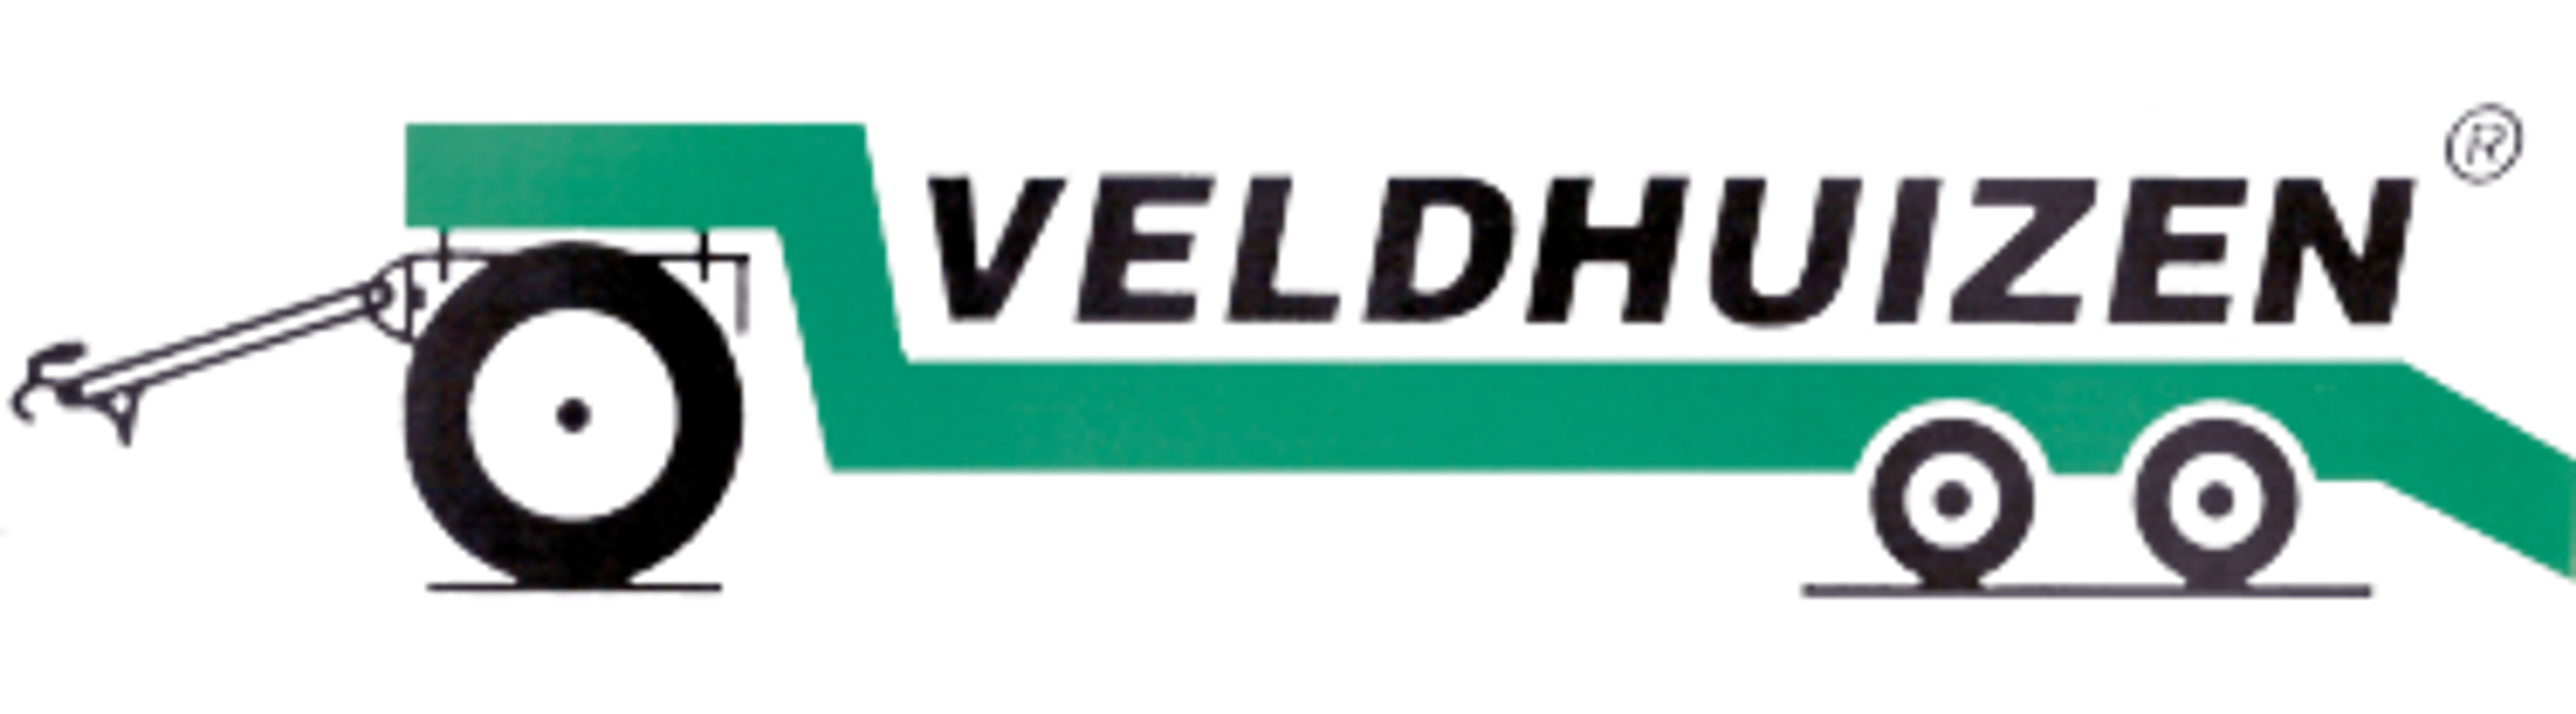 Logo Veldhuizen